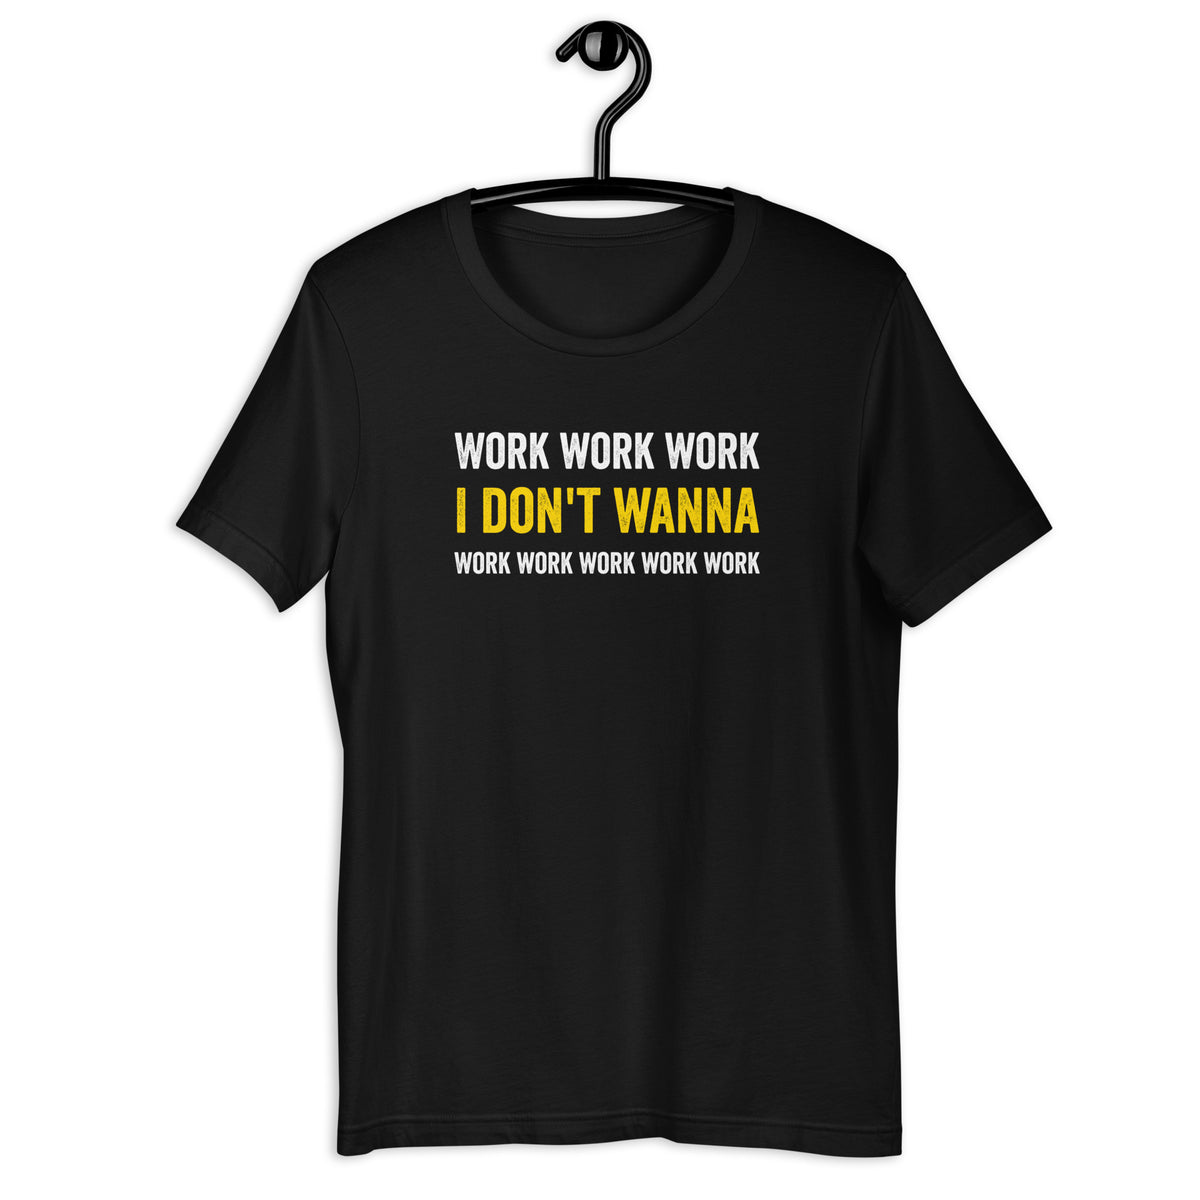 Work work work, I don't wanna Work work work work work T-Shirt - SHOPNOO